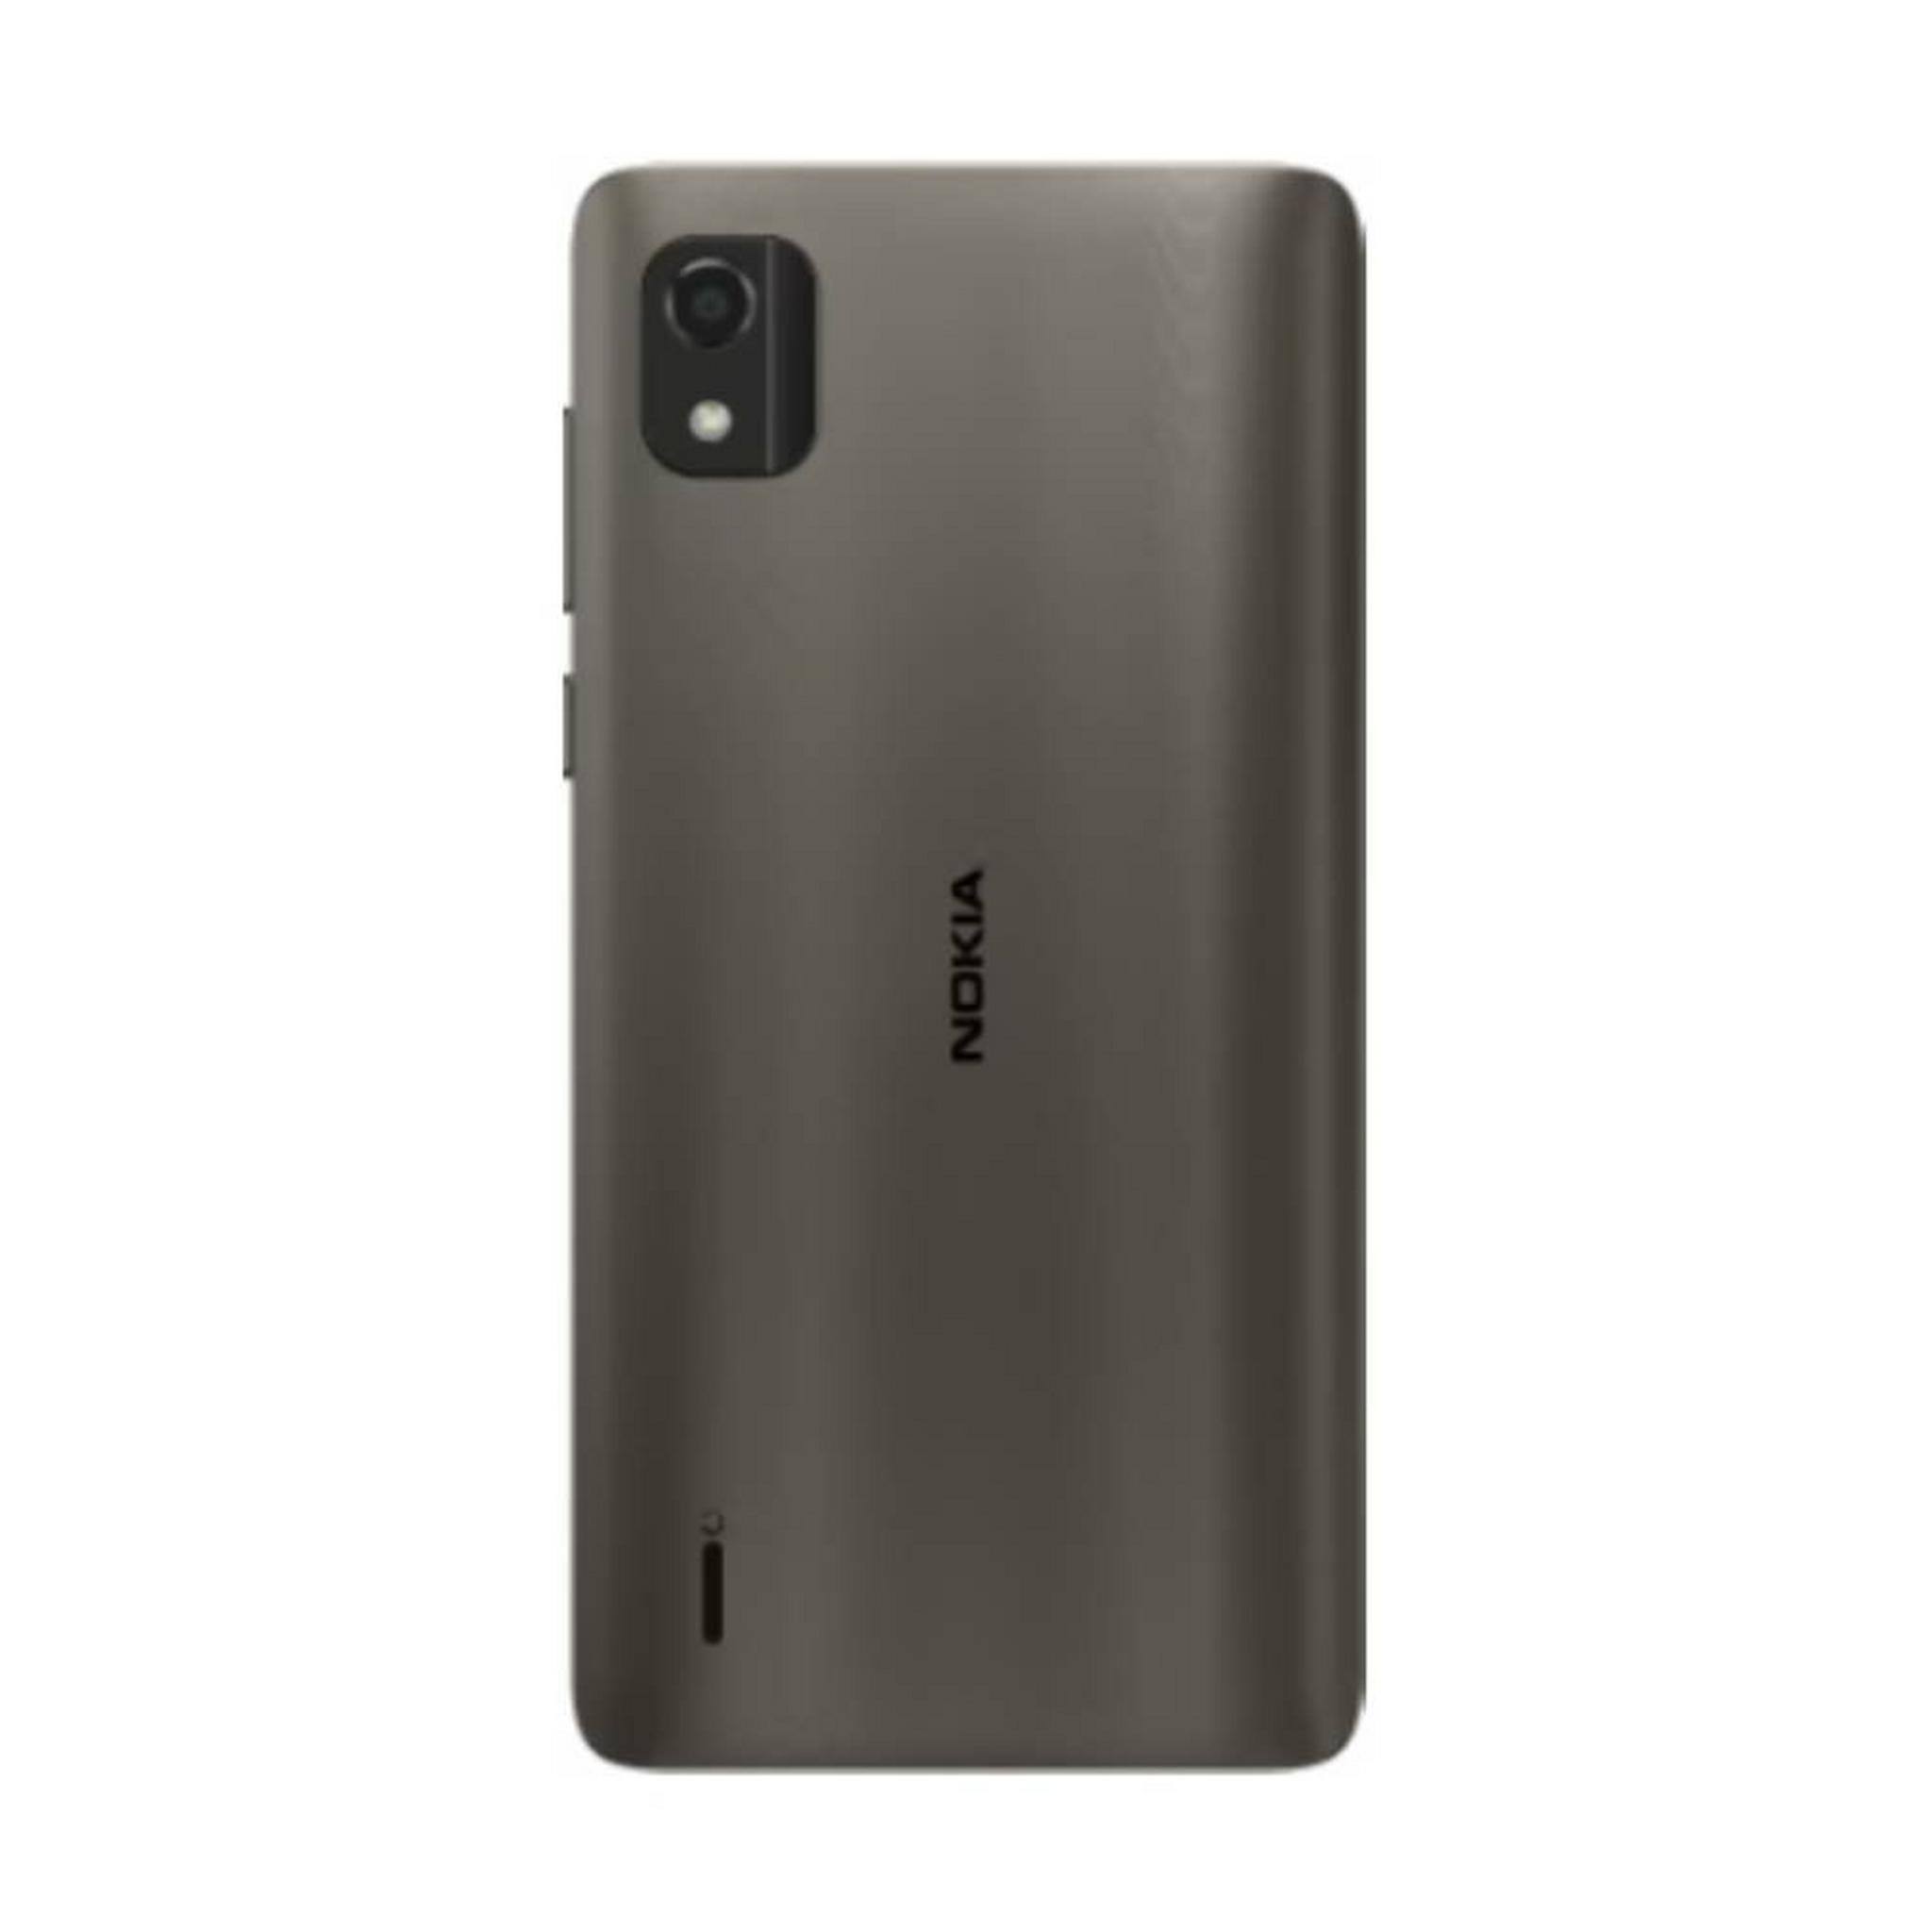 Nokia C2 2E Phone, 5.7-inch, 2GB RAM, 32GB, C2 2E – Grey